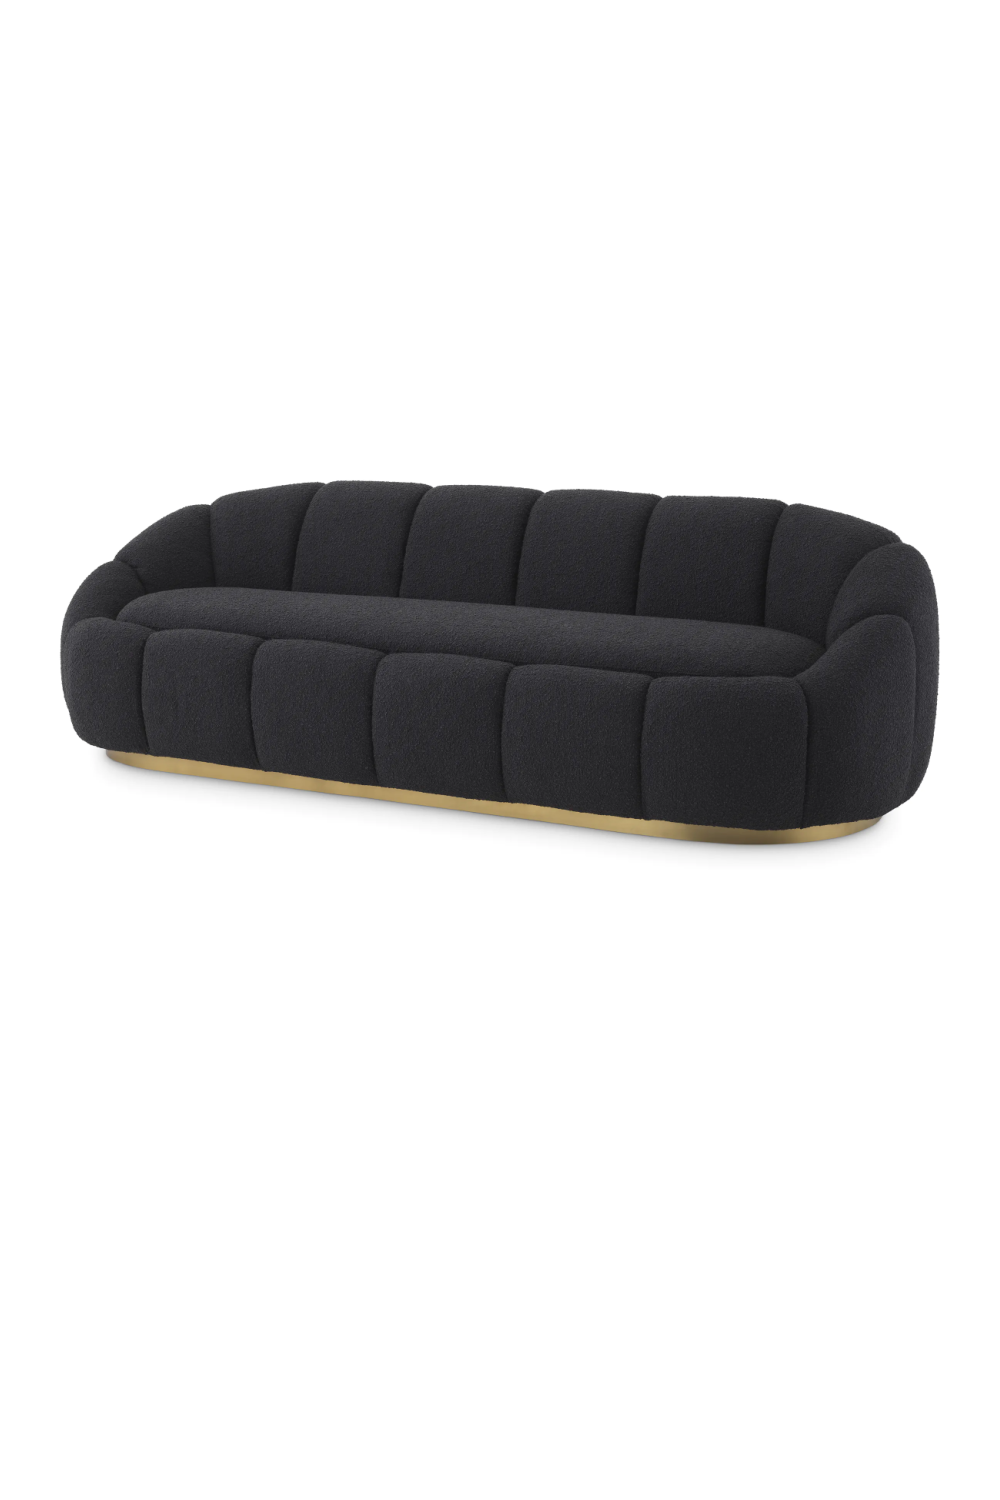 Channeled Modern Sofa | Eichholtz Inger | Oroa.com